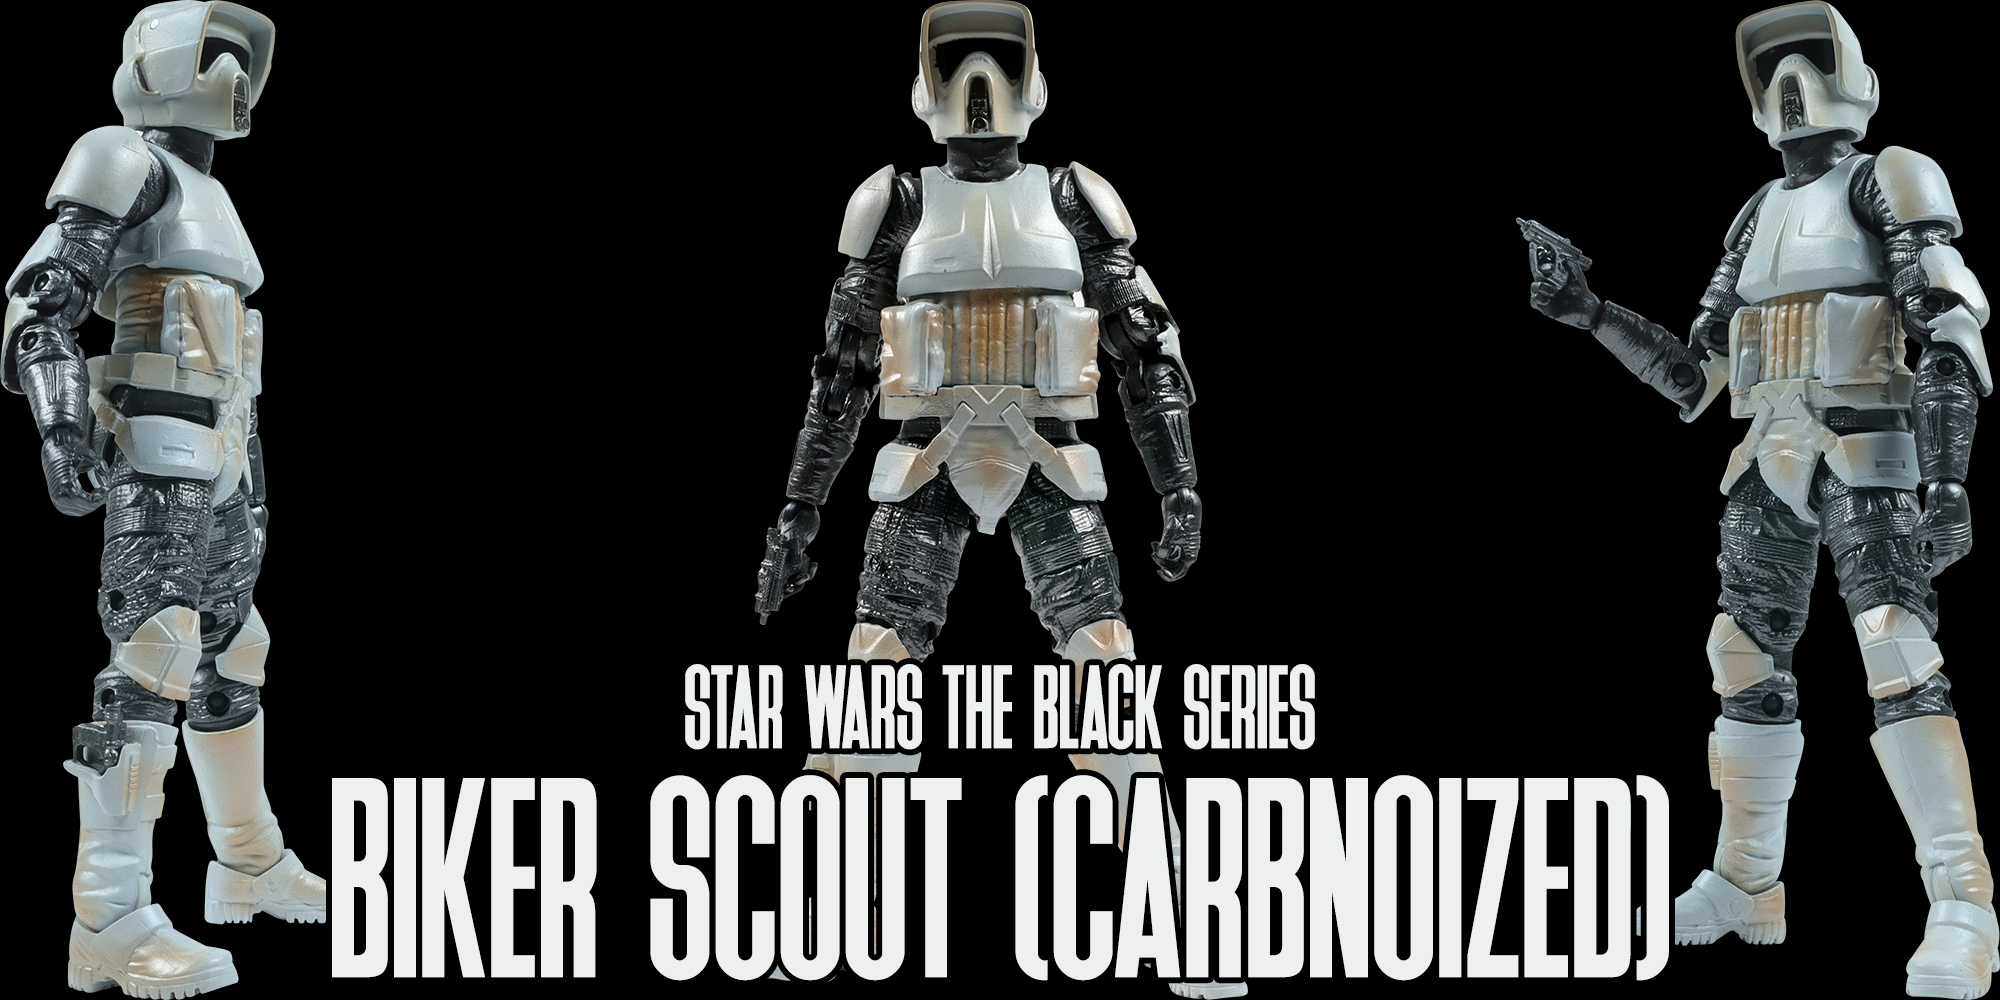 Star Wars The Black Series Biker Scout Added